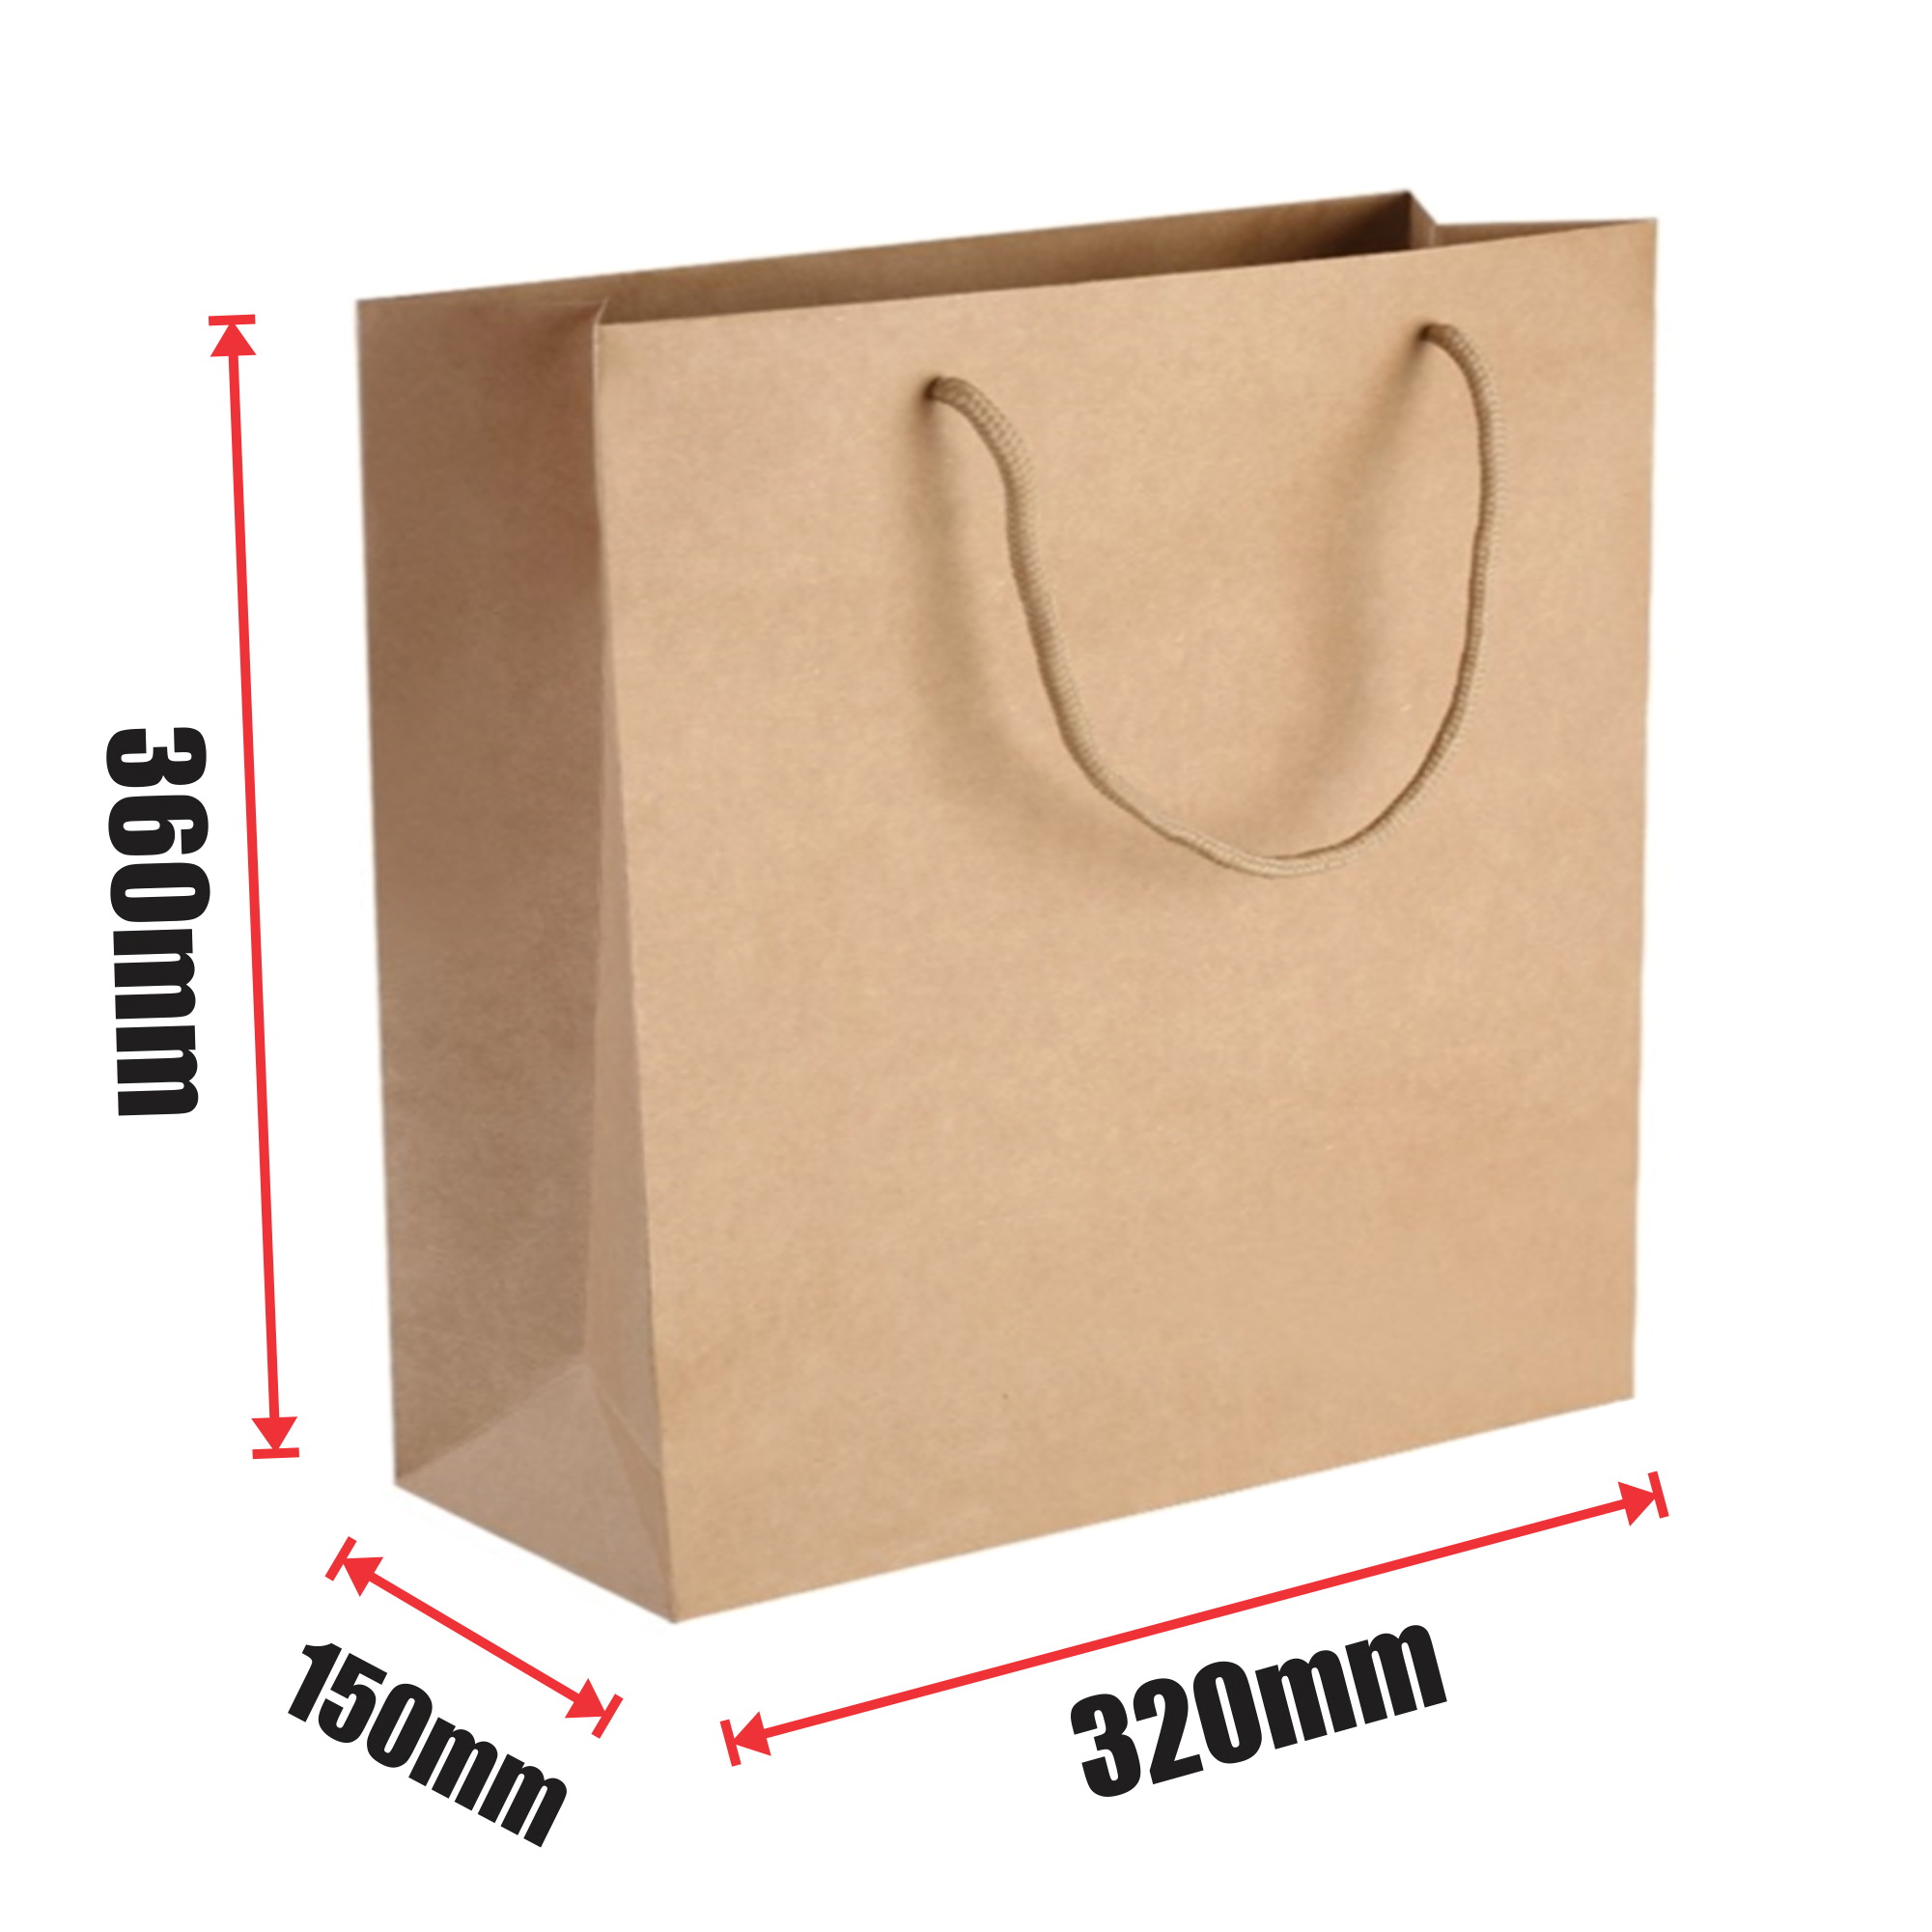 Get Custom A4 Paper Bags (Medium) - Design And Printing Company In Kwara  State, Nigeria